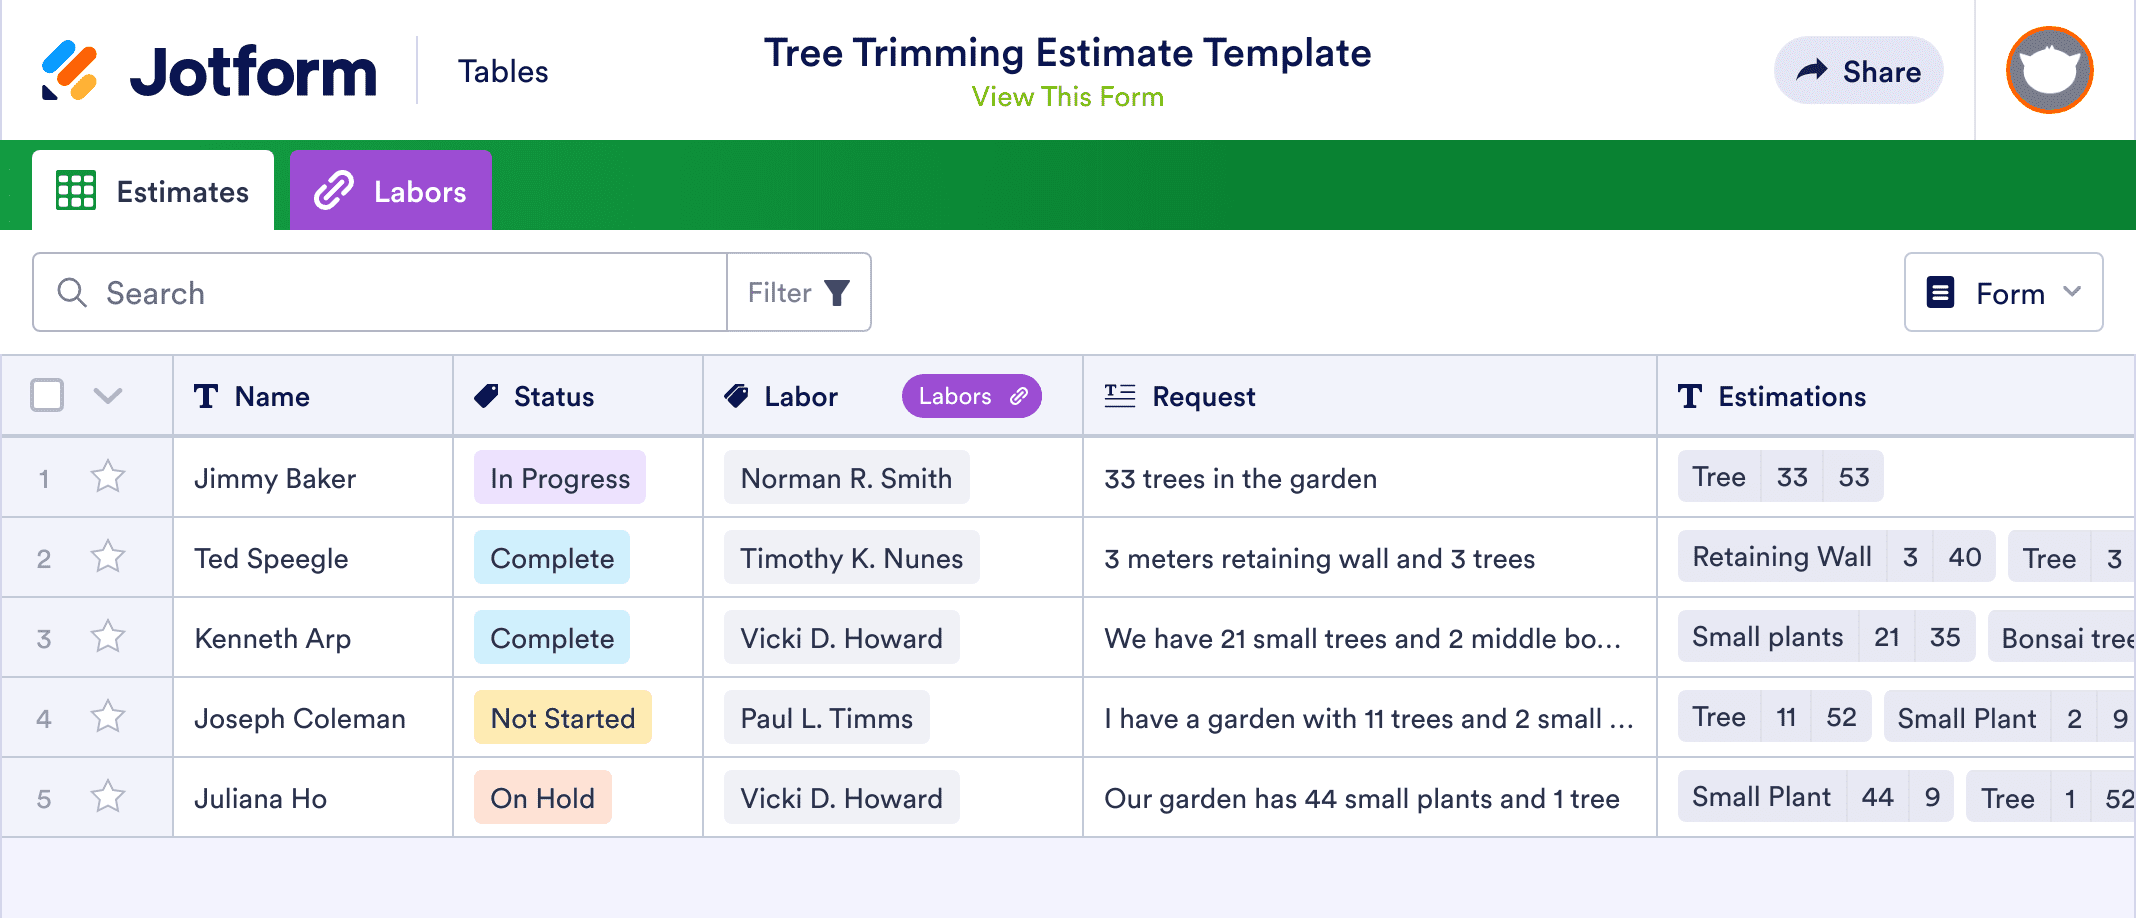 Tree Trimming Estimate Template